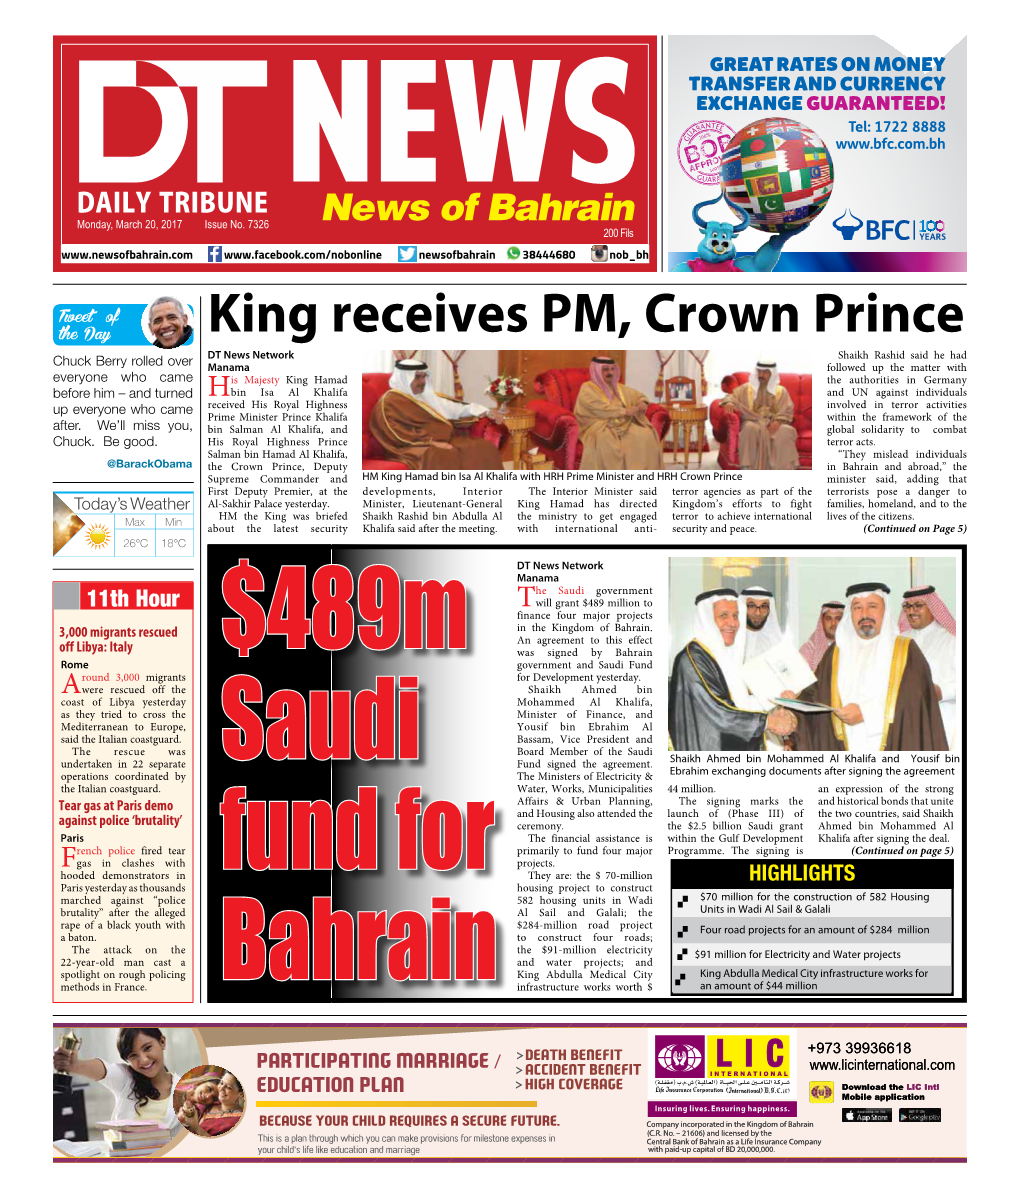 King Receives PM, Crown Prince